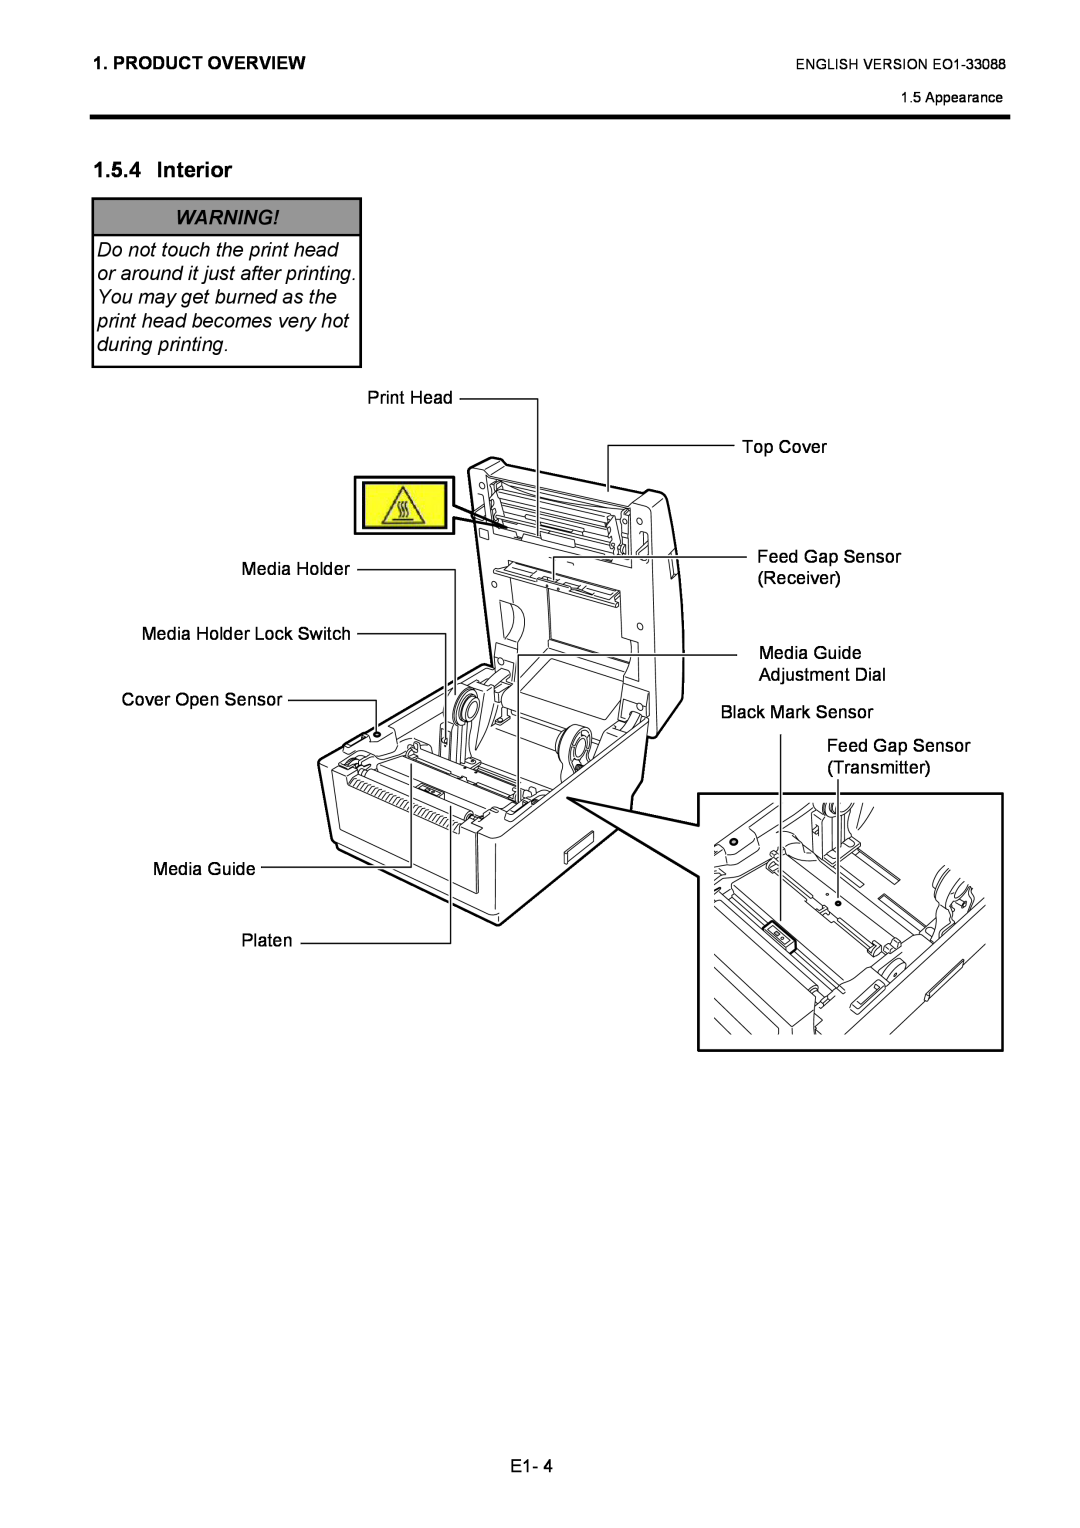 Toshiba EO1-33088 Interior, Product Overview, Print Head Media Holder Media Holder Lock Switch Cover Open Sensor 